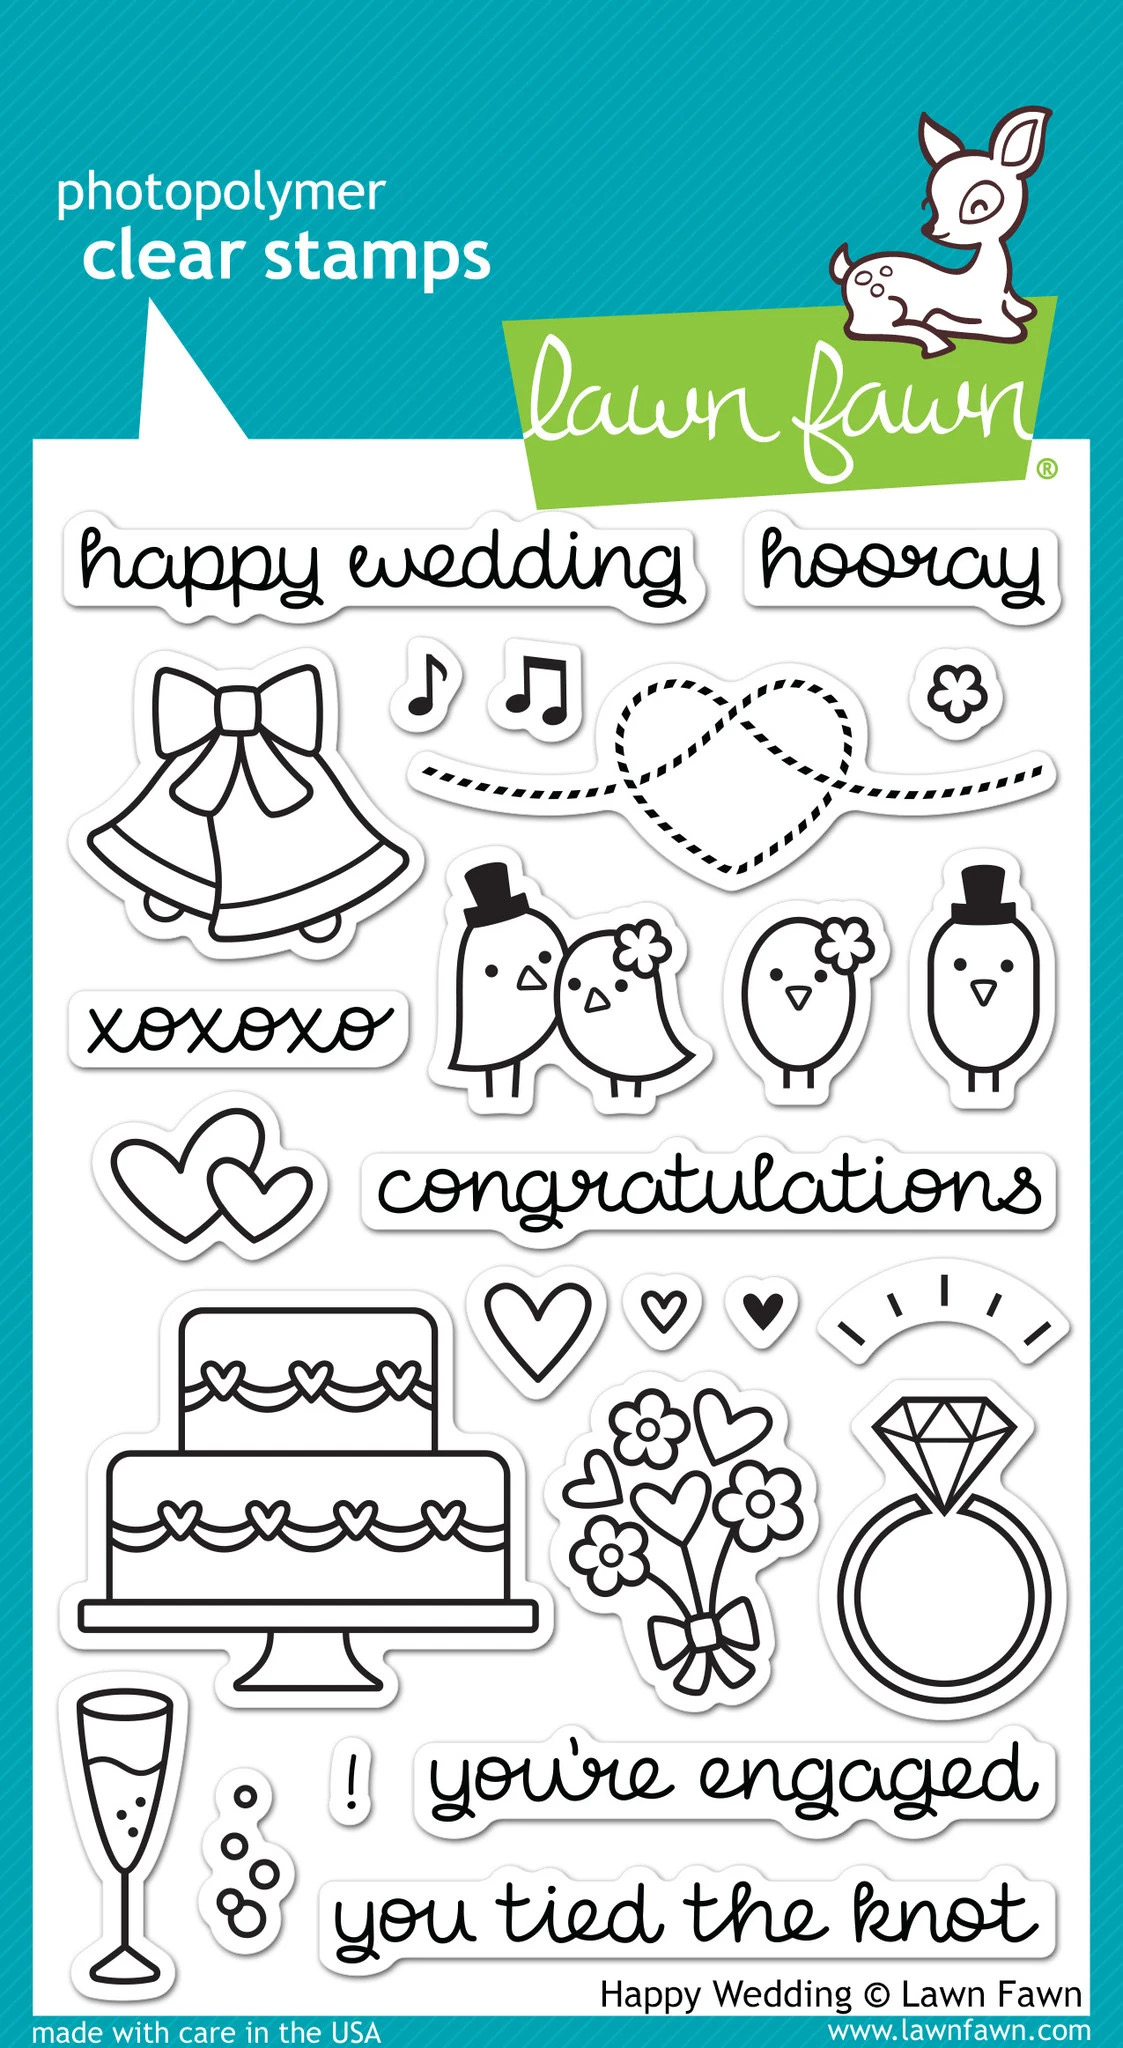 Happy Wedding stamps